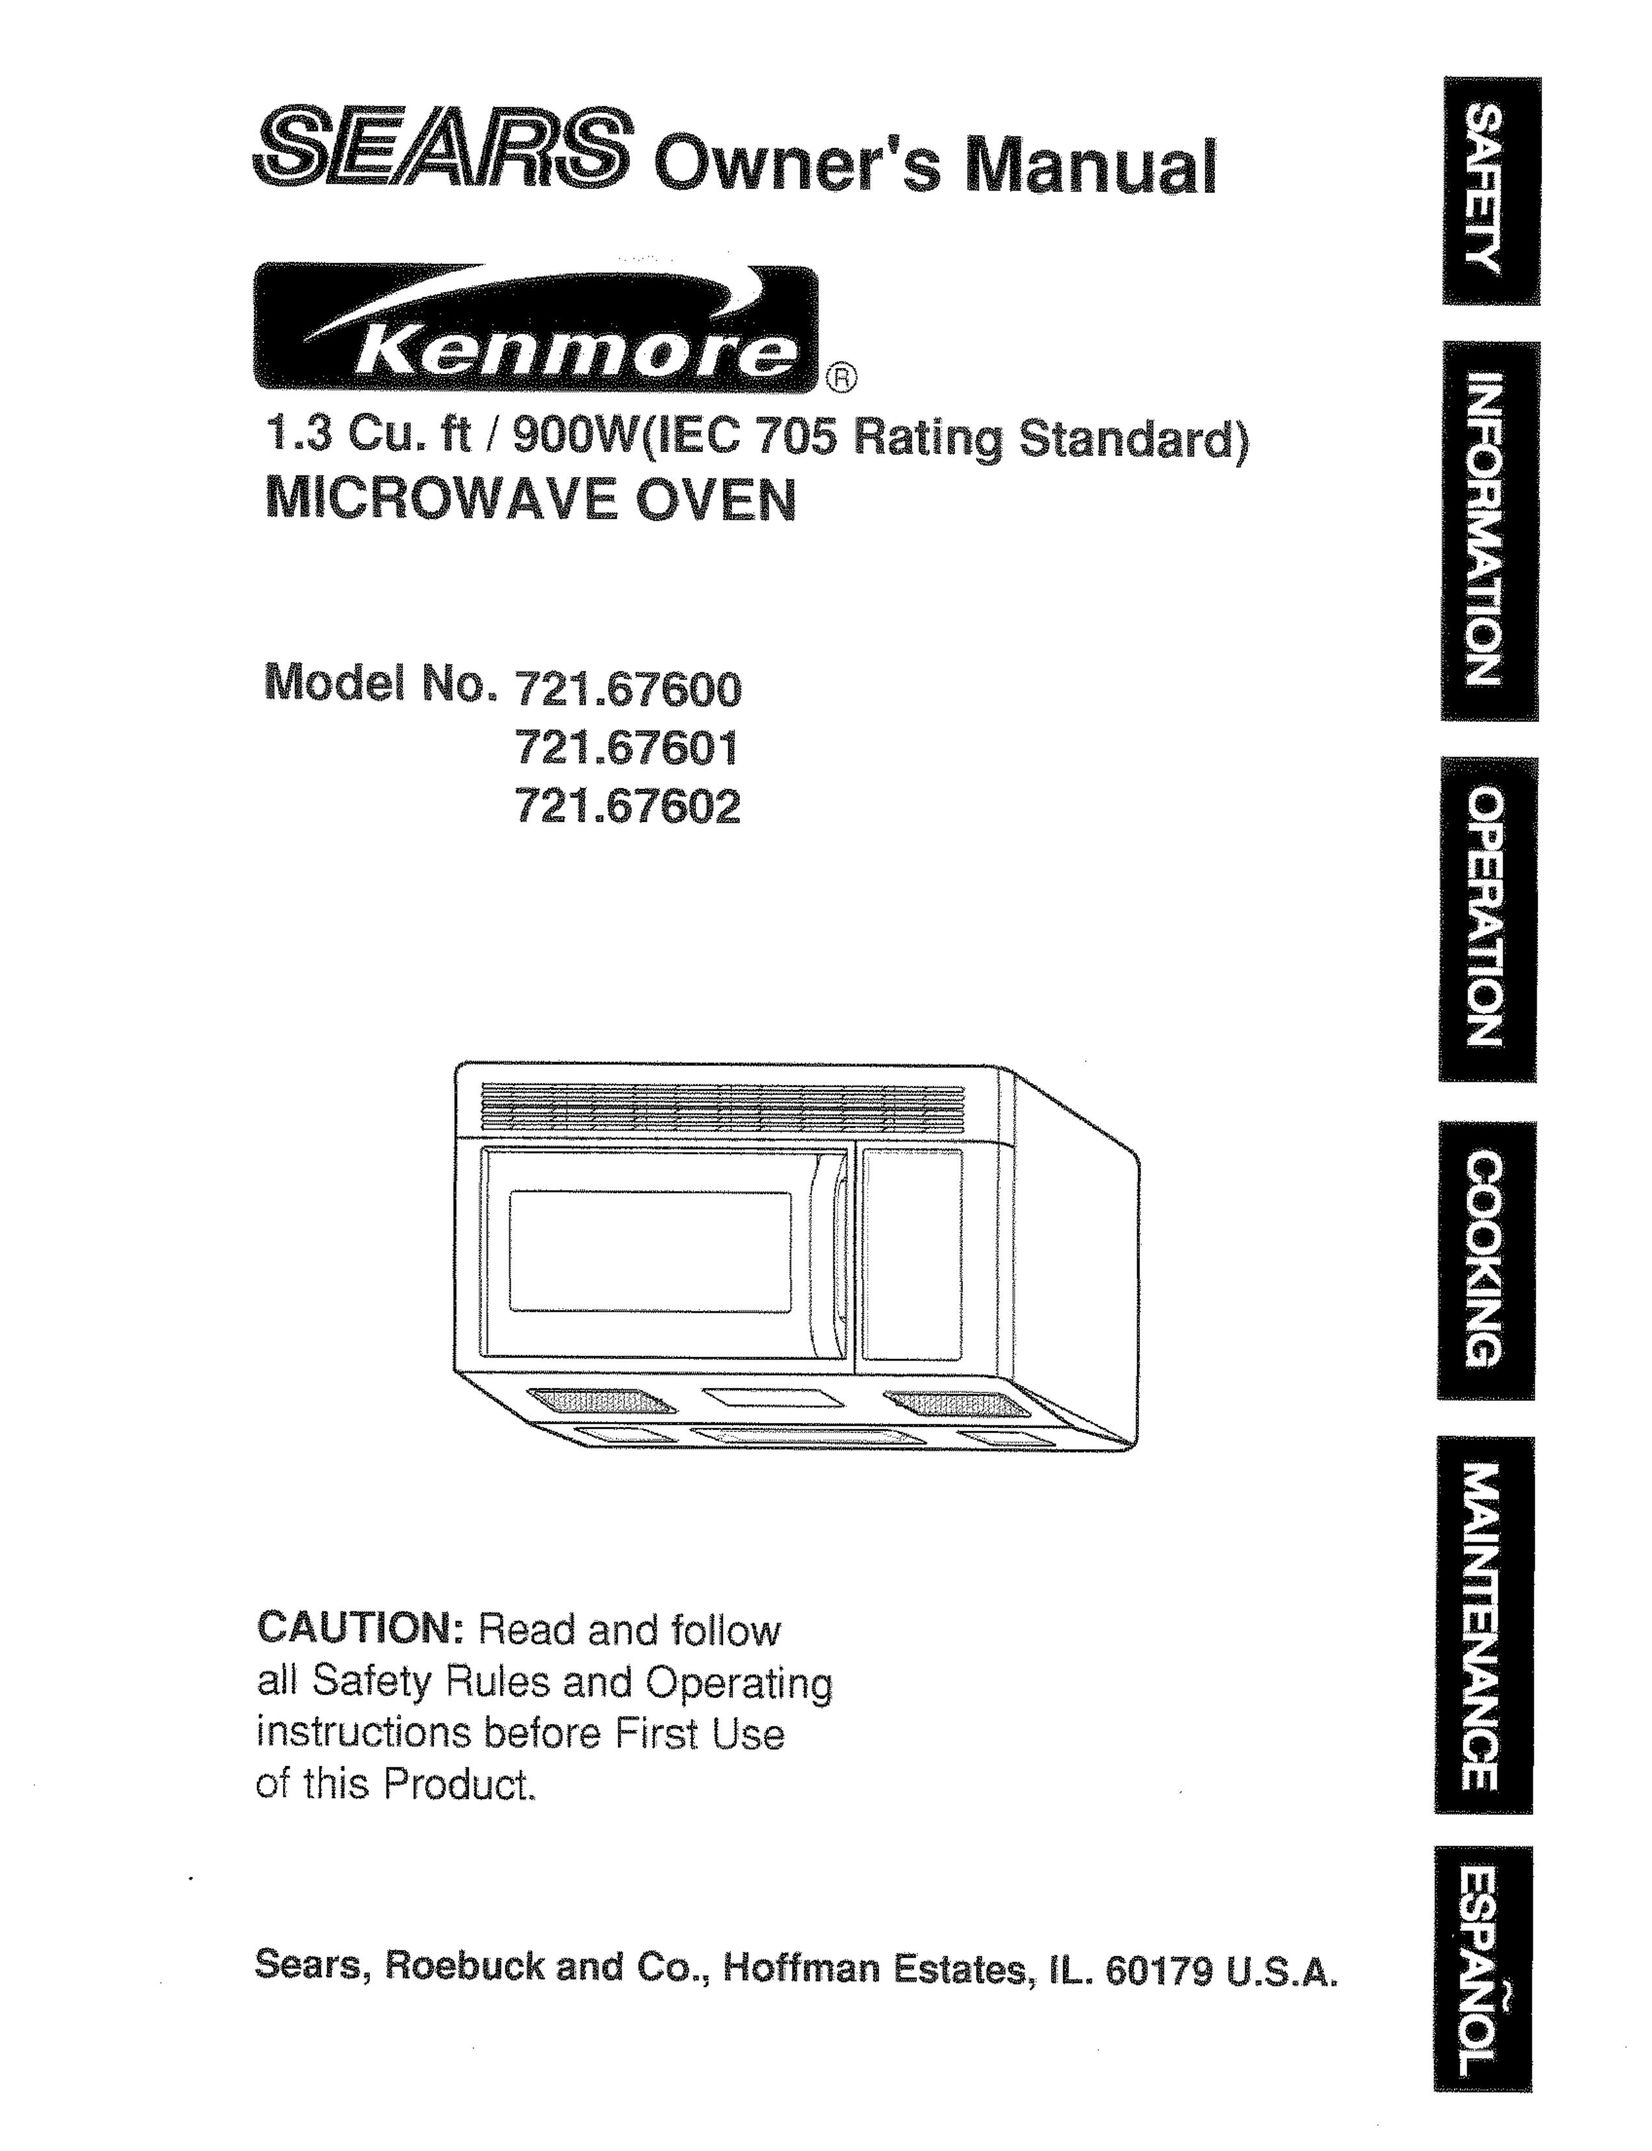 Sears 721.67601 Microwave Oven User Manual